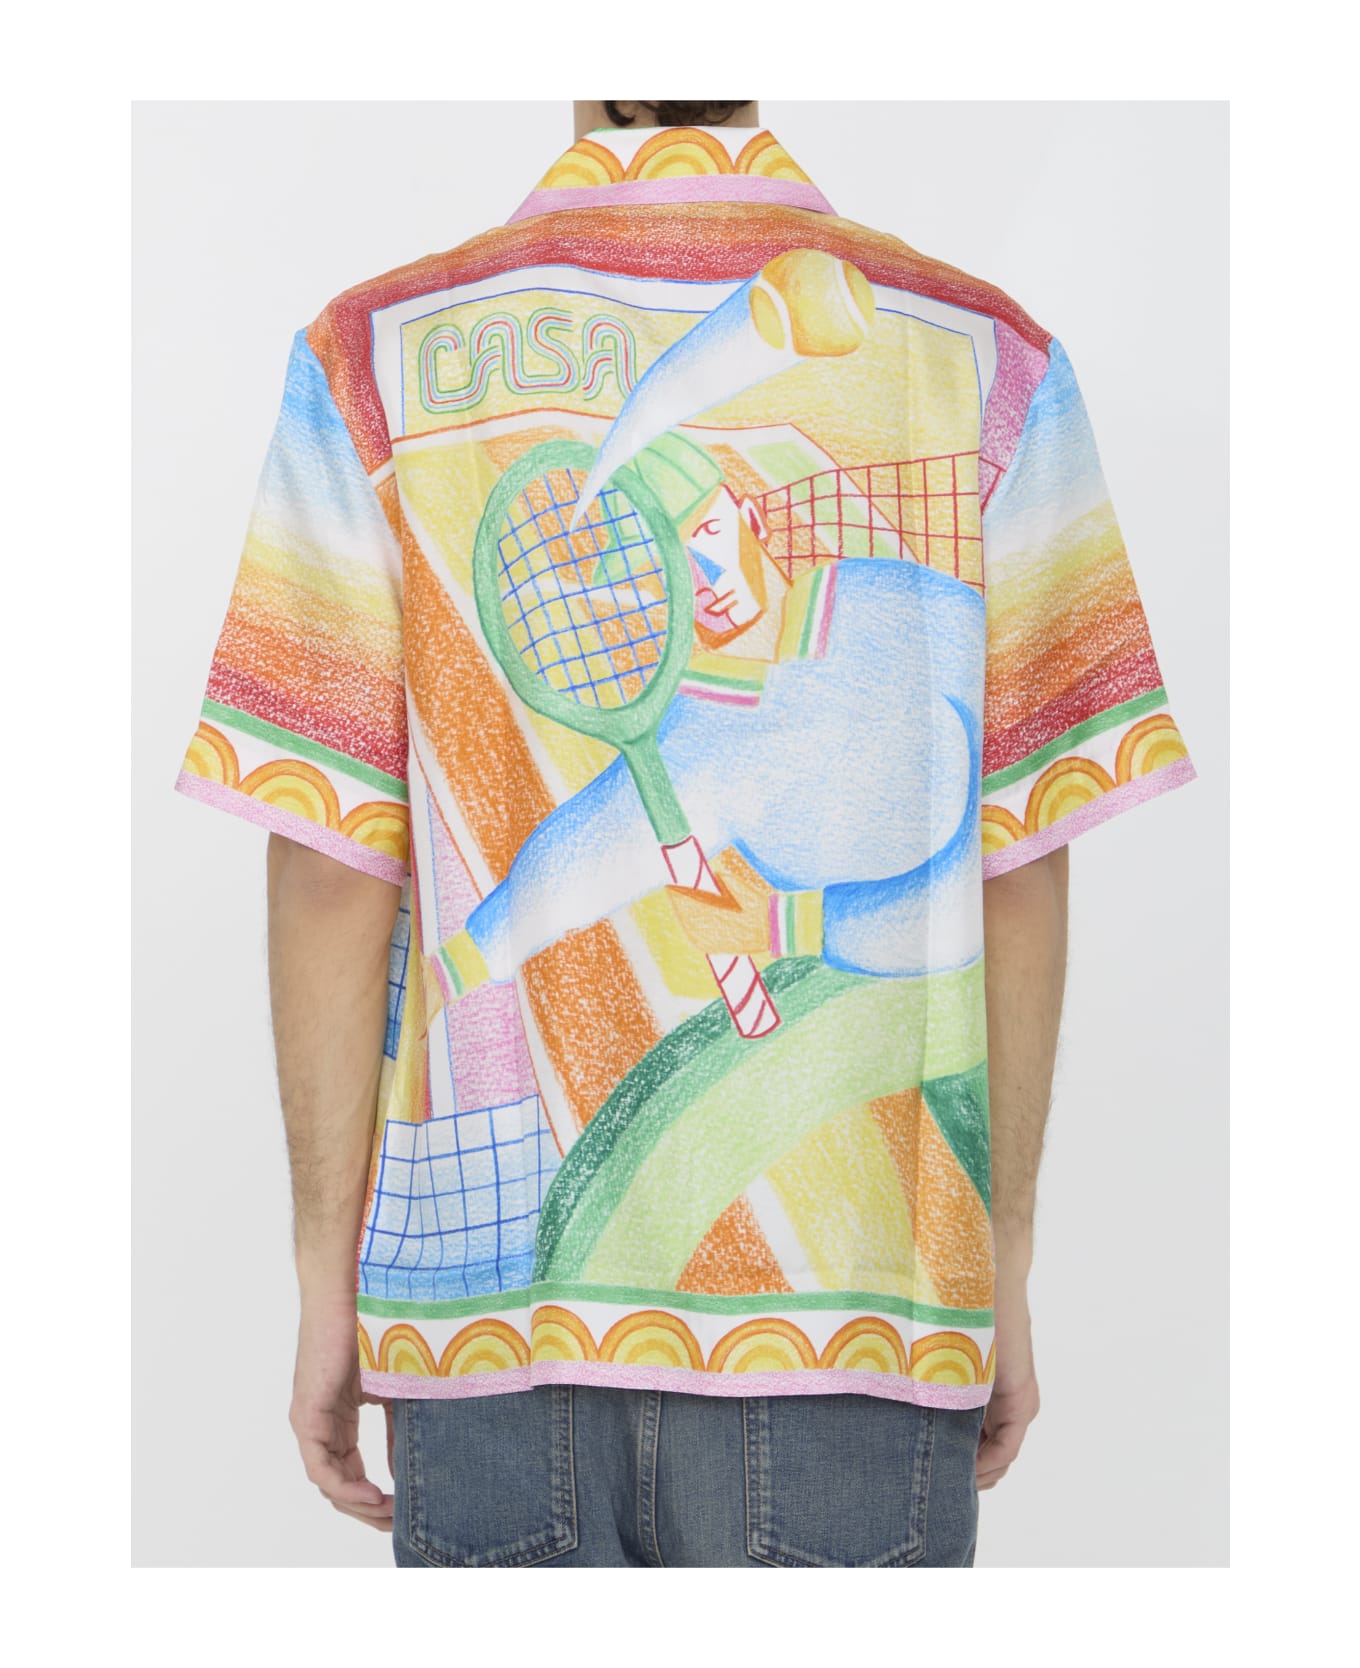 Casablanca Crayon Tennis Player Shirt - MULTICOLOR タンクトップ